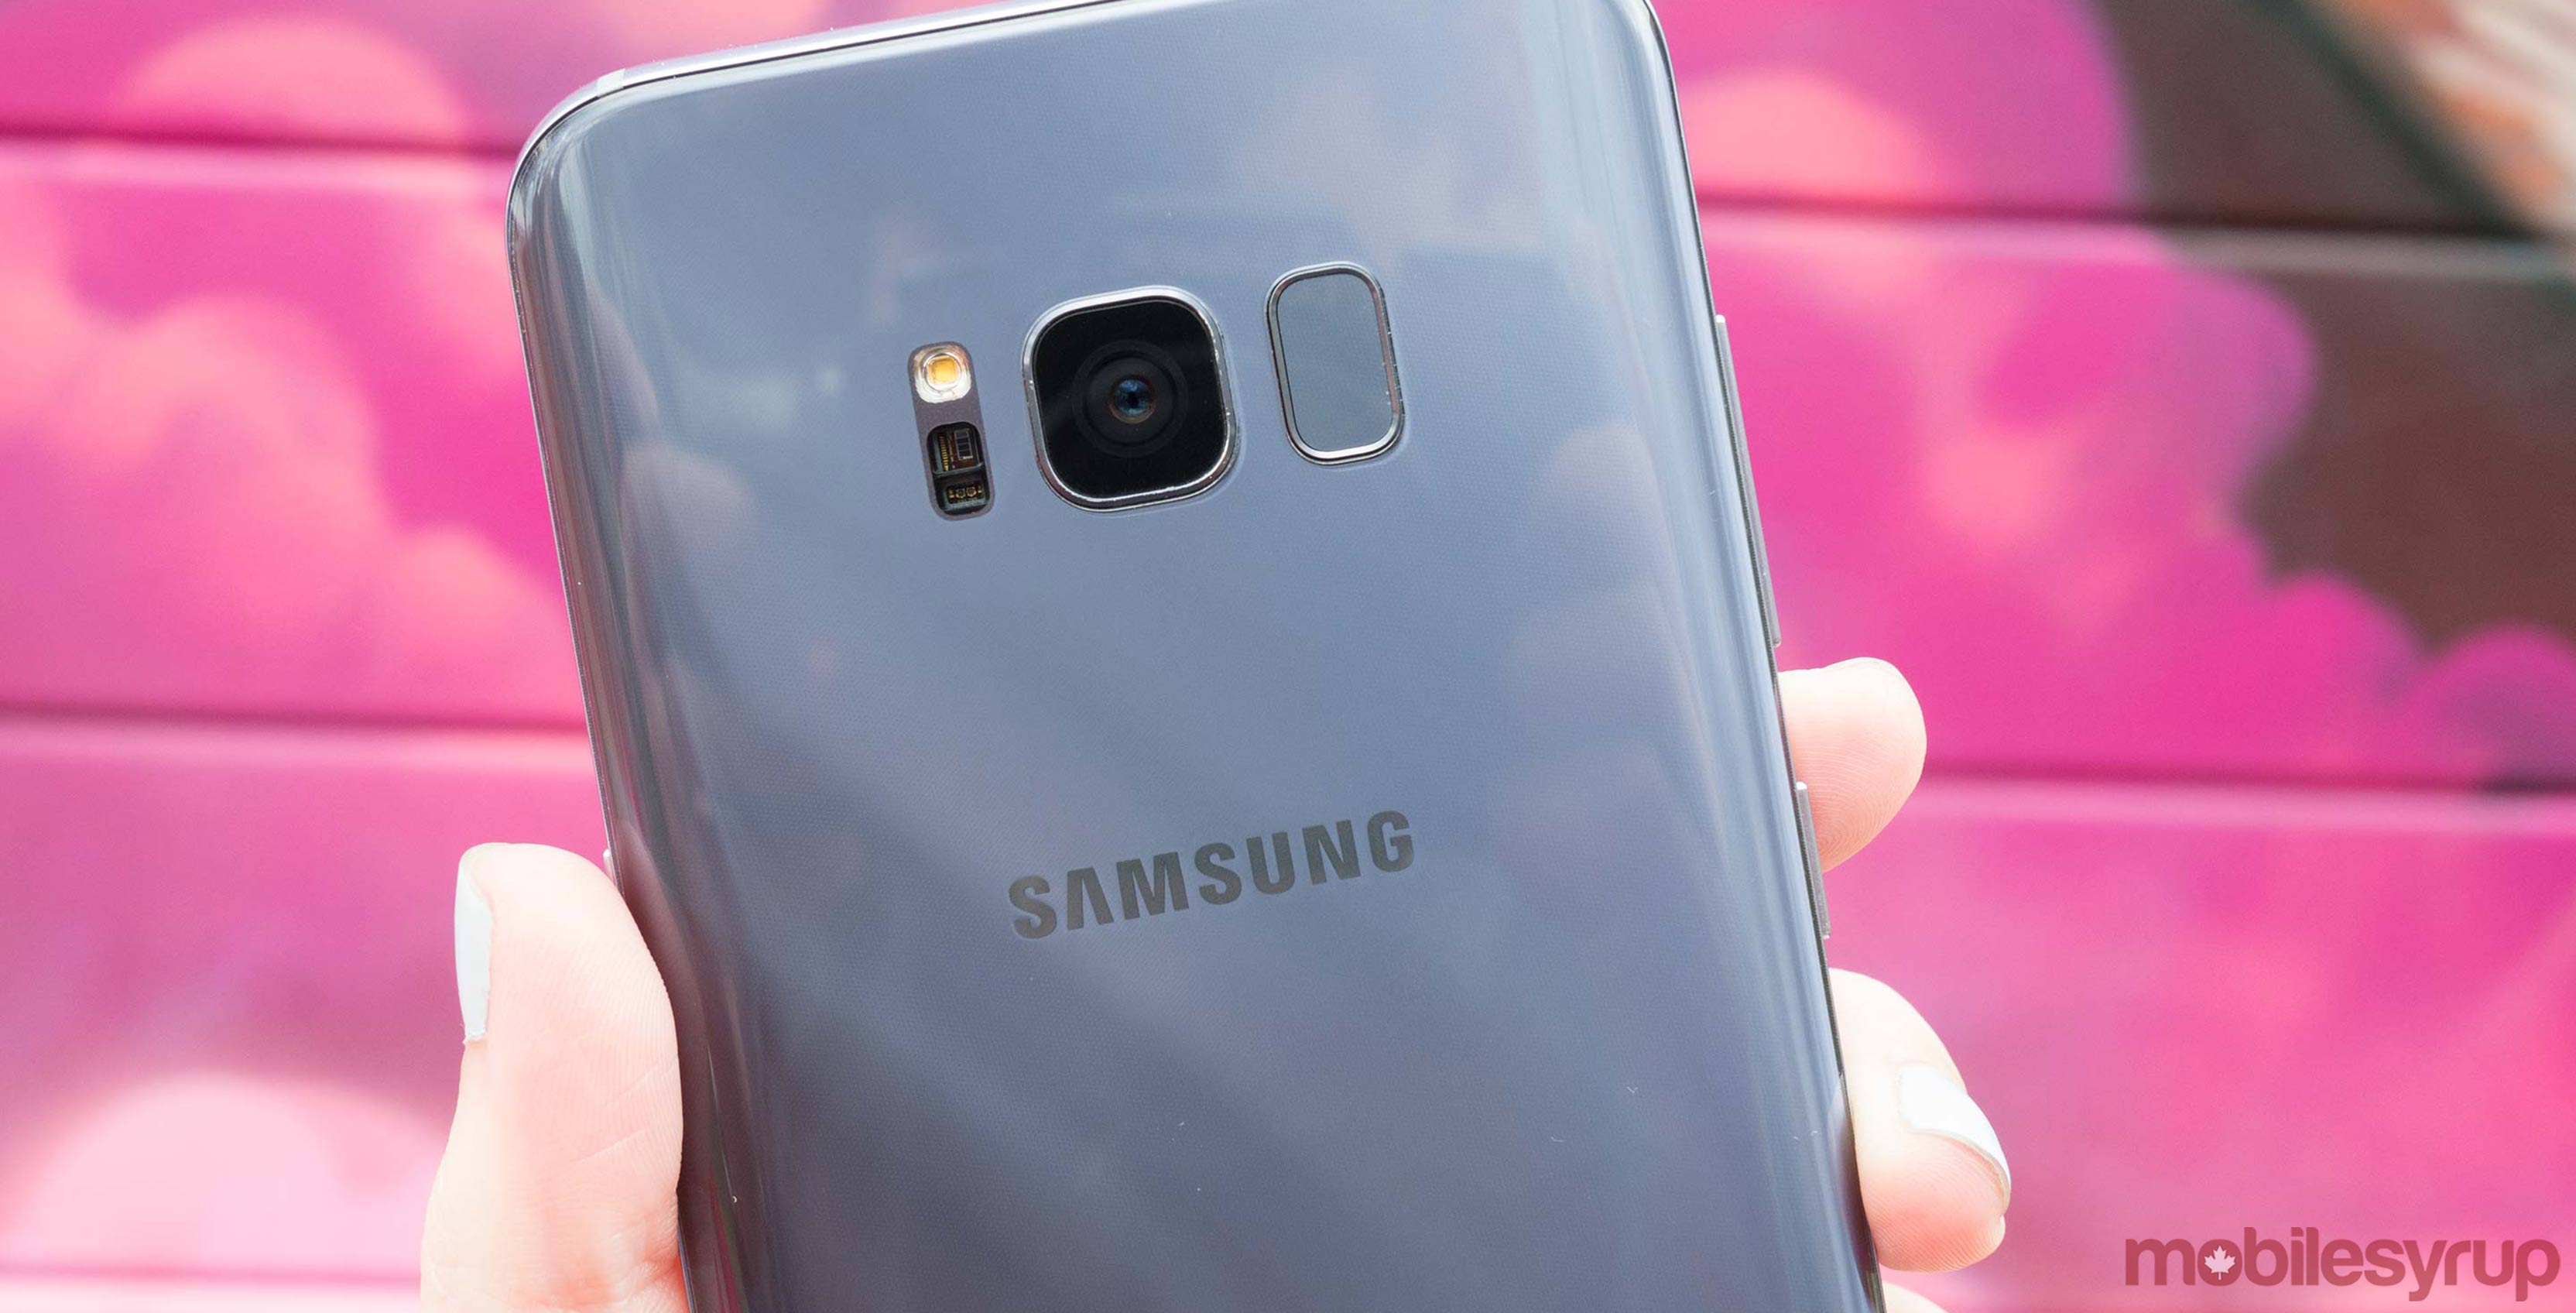 Samsung Galaxy S8 camera bump